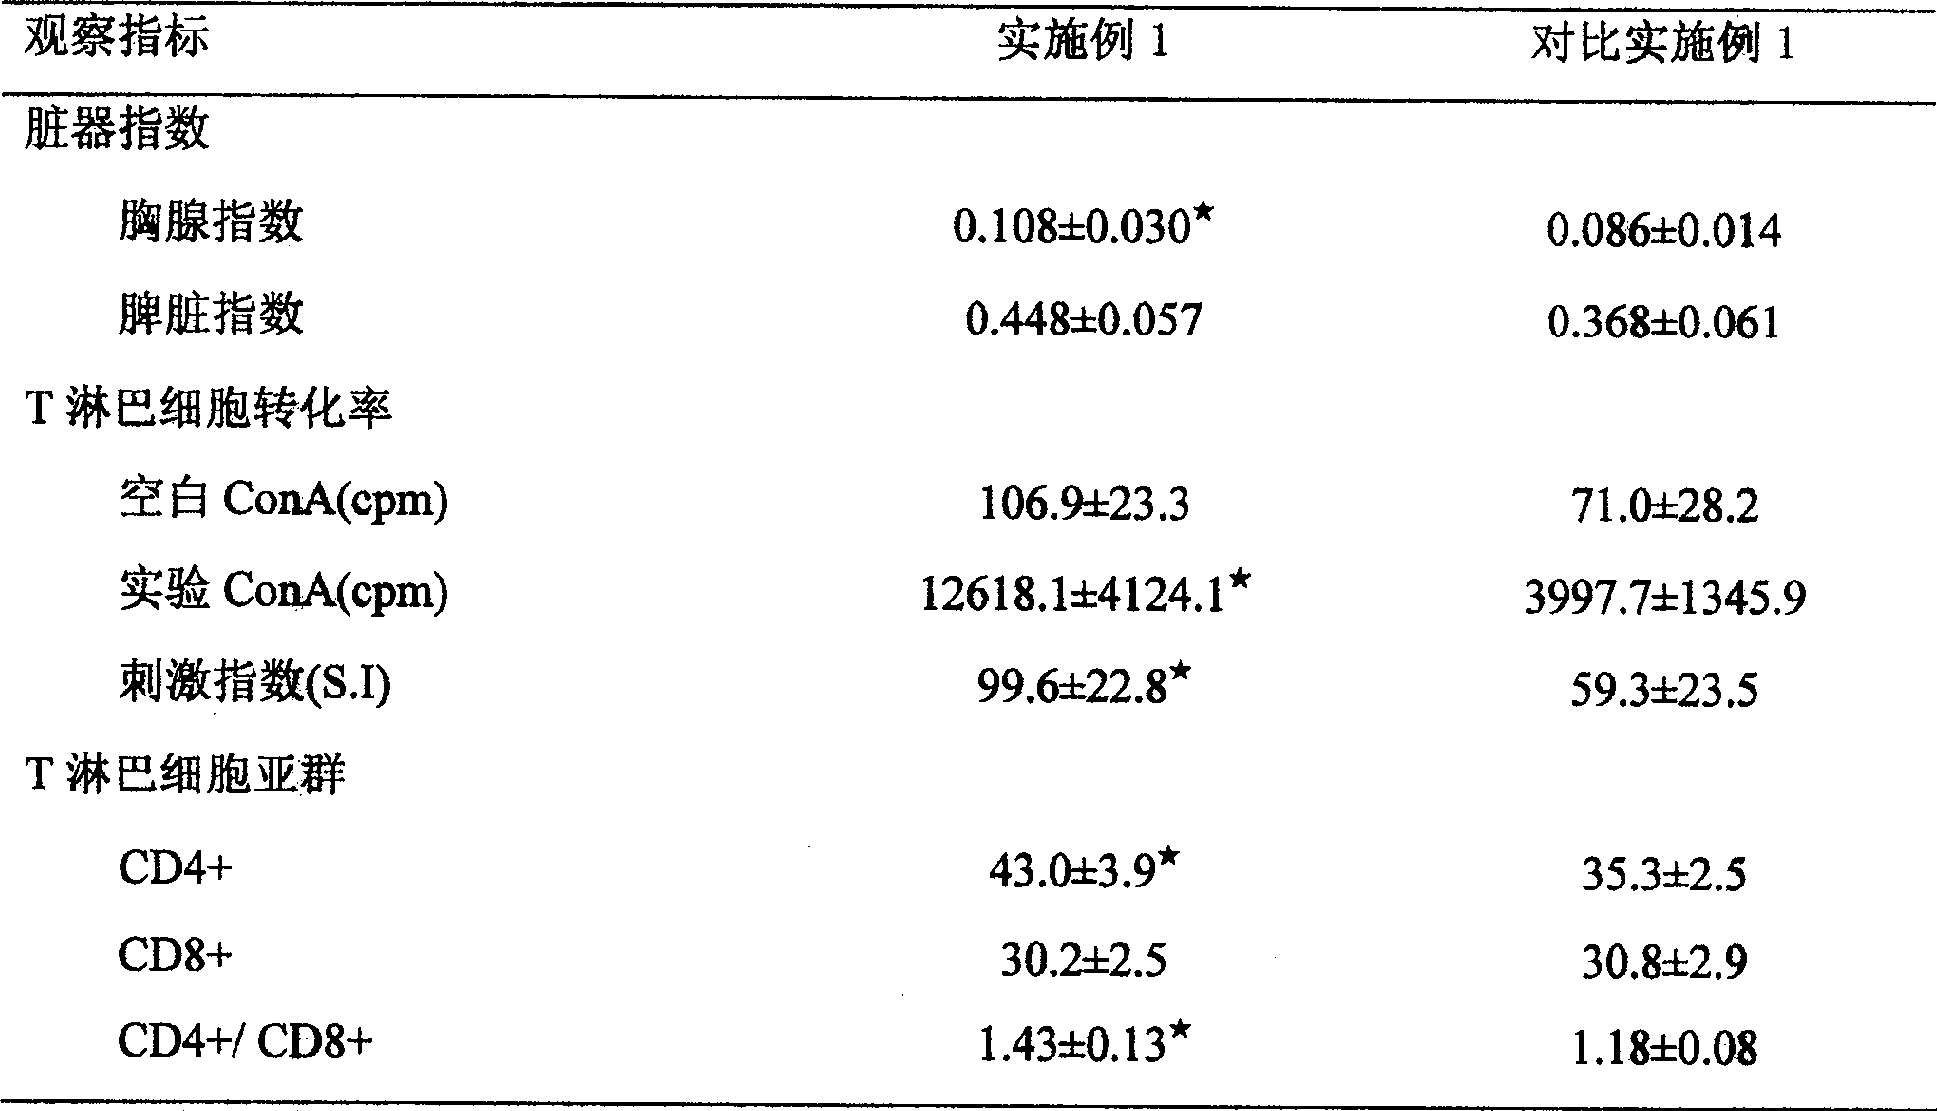 Composition of amino acid